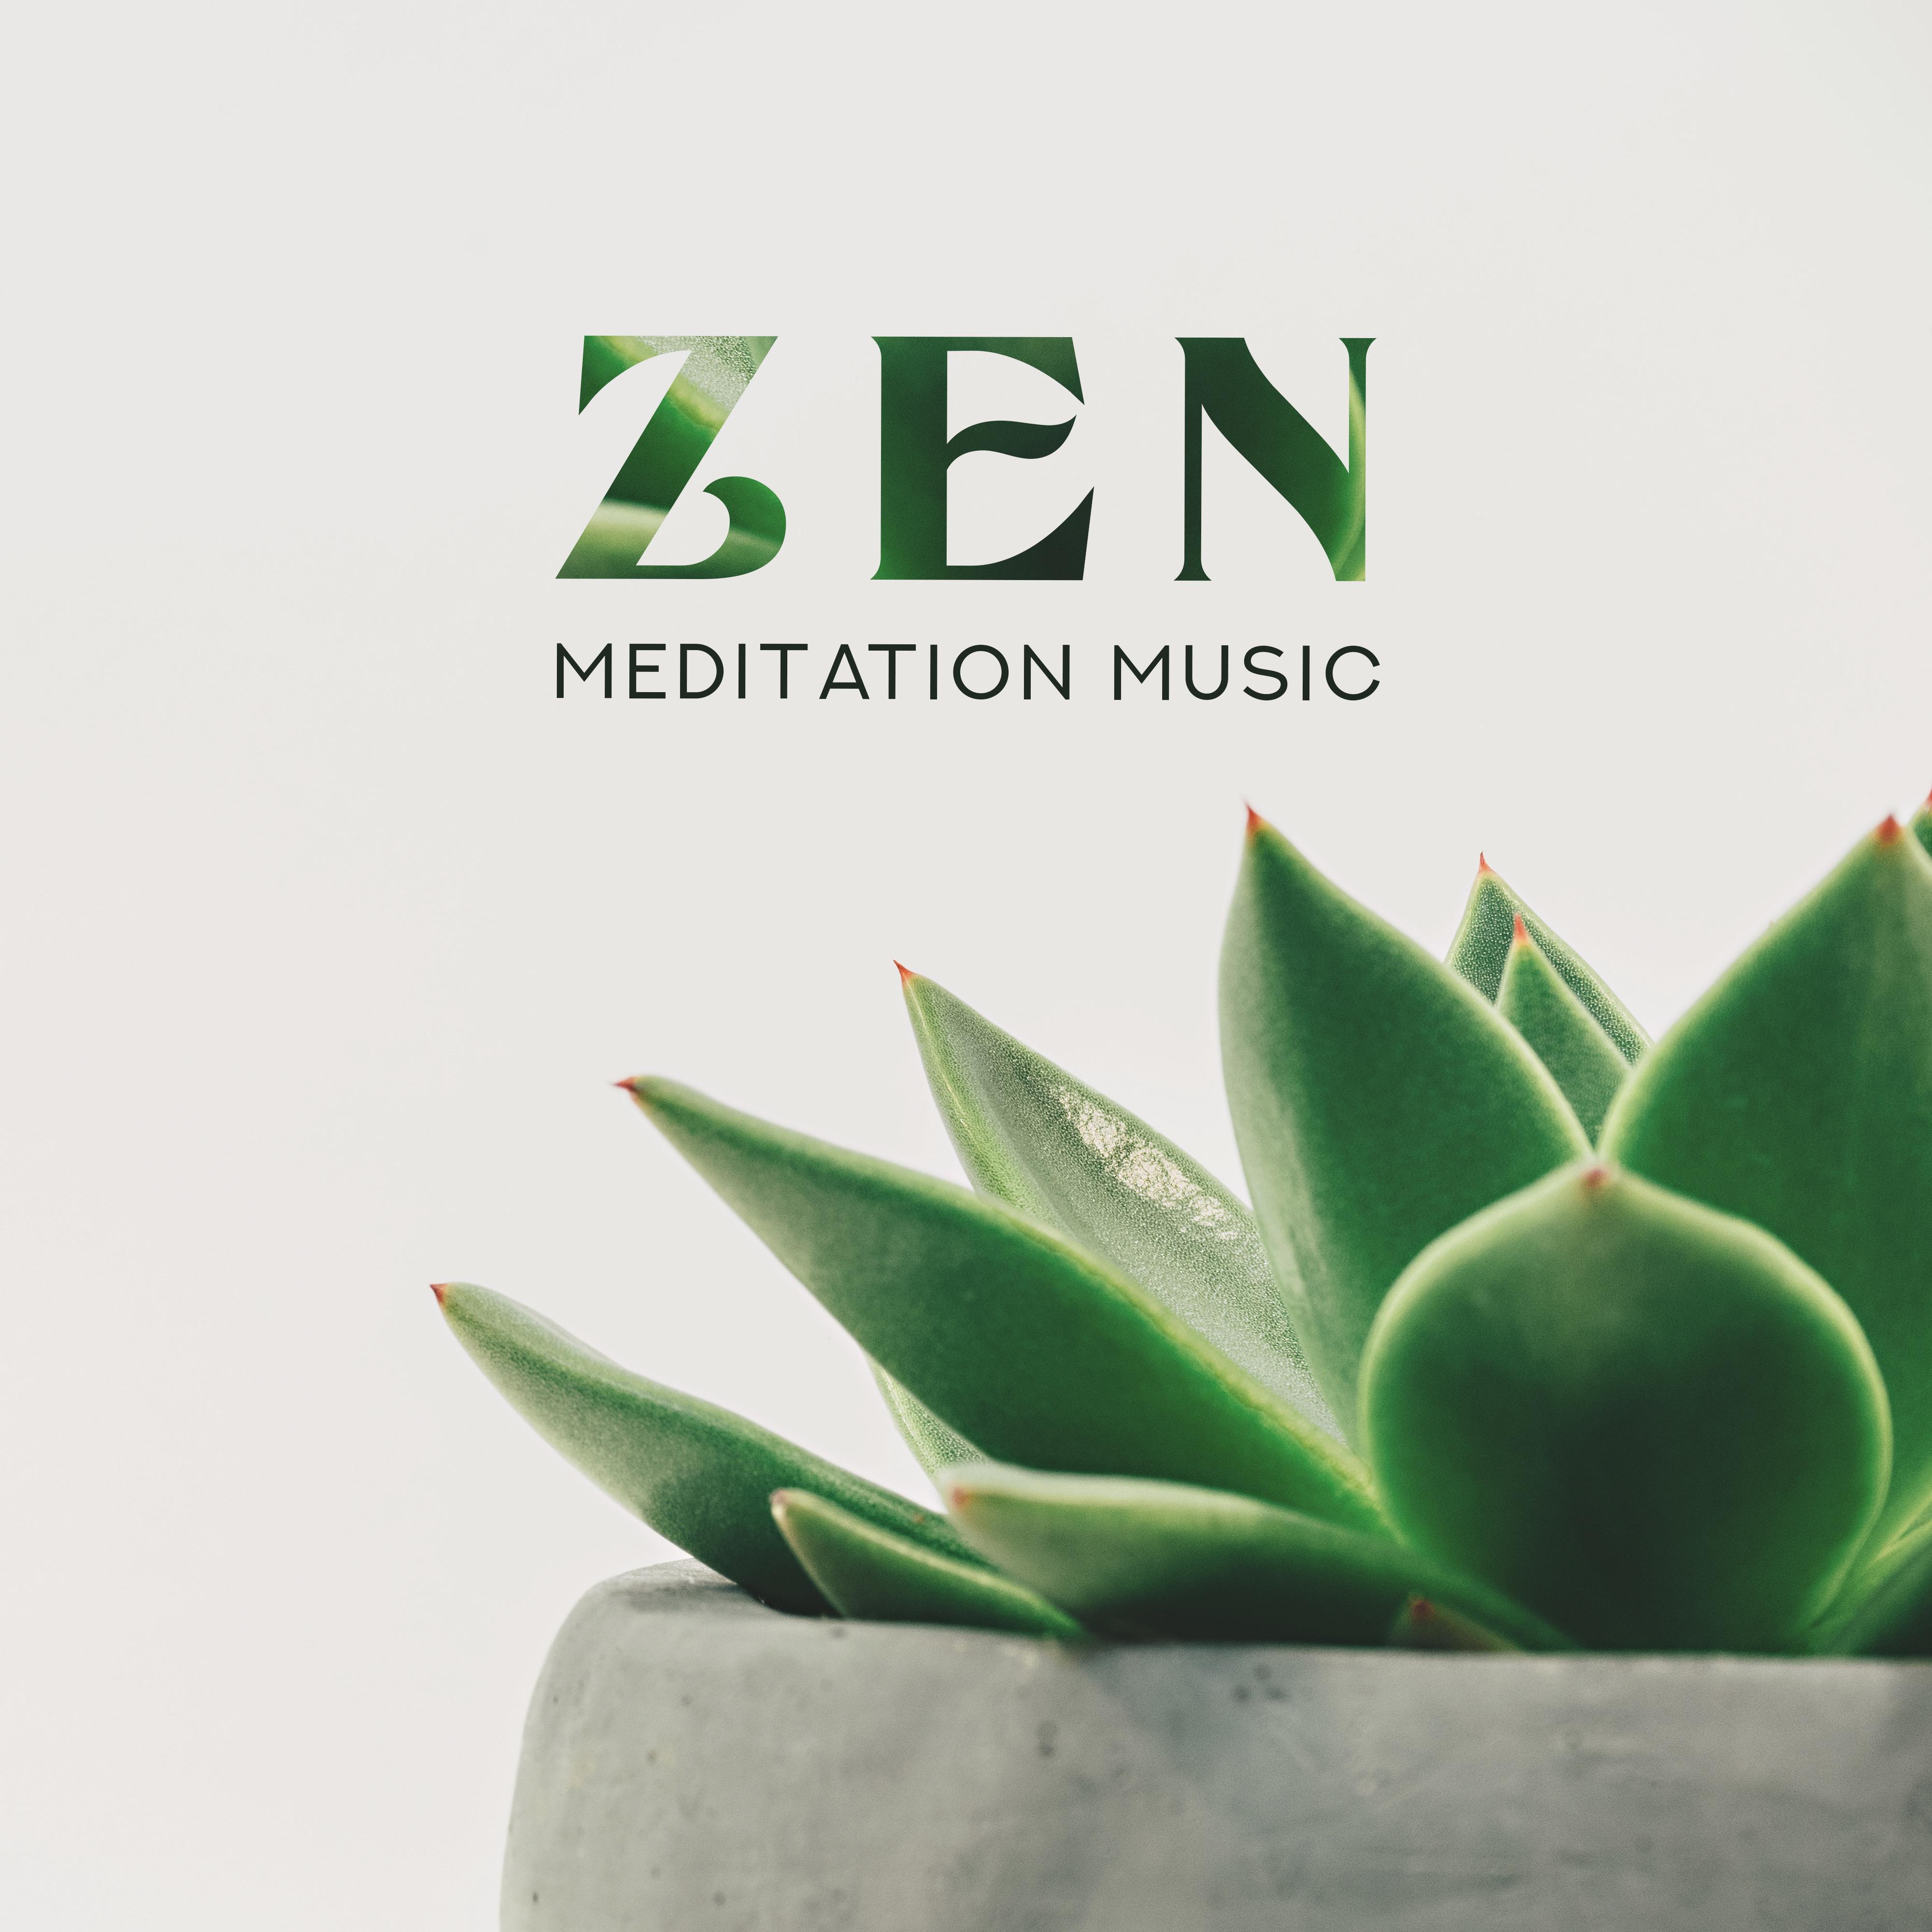 Zen Meditation Music - Everyday Yoga Practice, Meditation Music Zone, Inner Harmony, Healing Music to Calm Down, Relaxation, Yoga Meditation